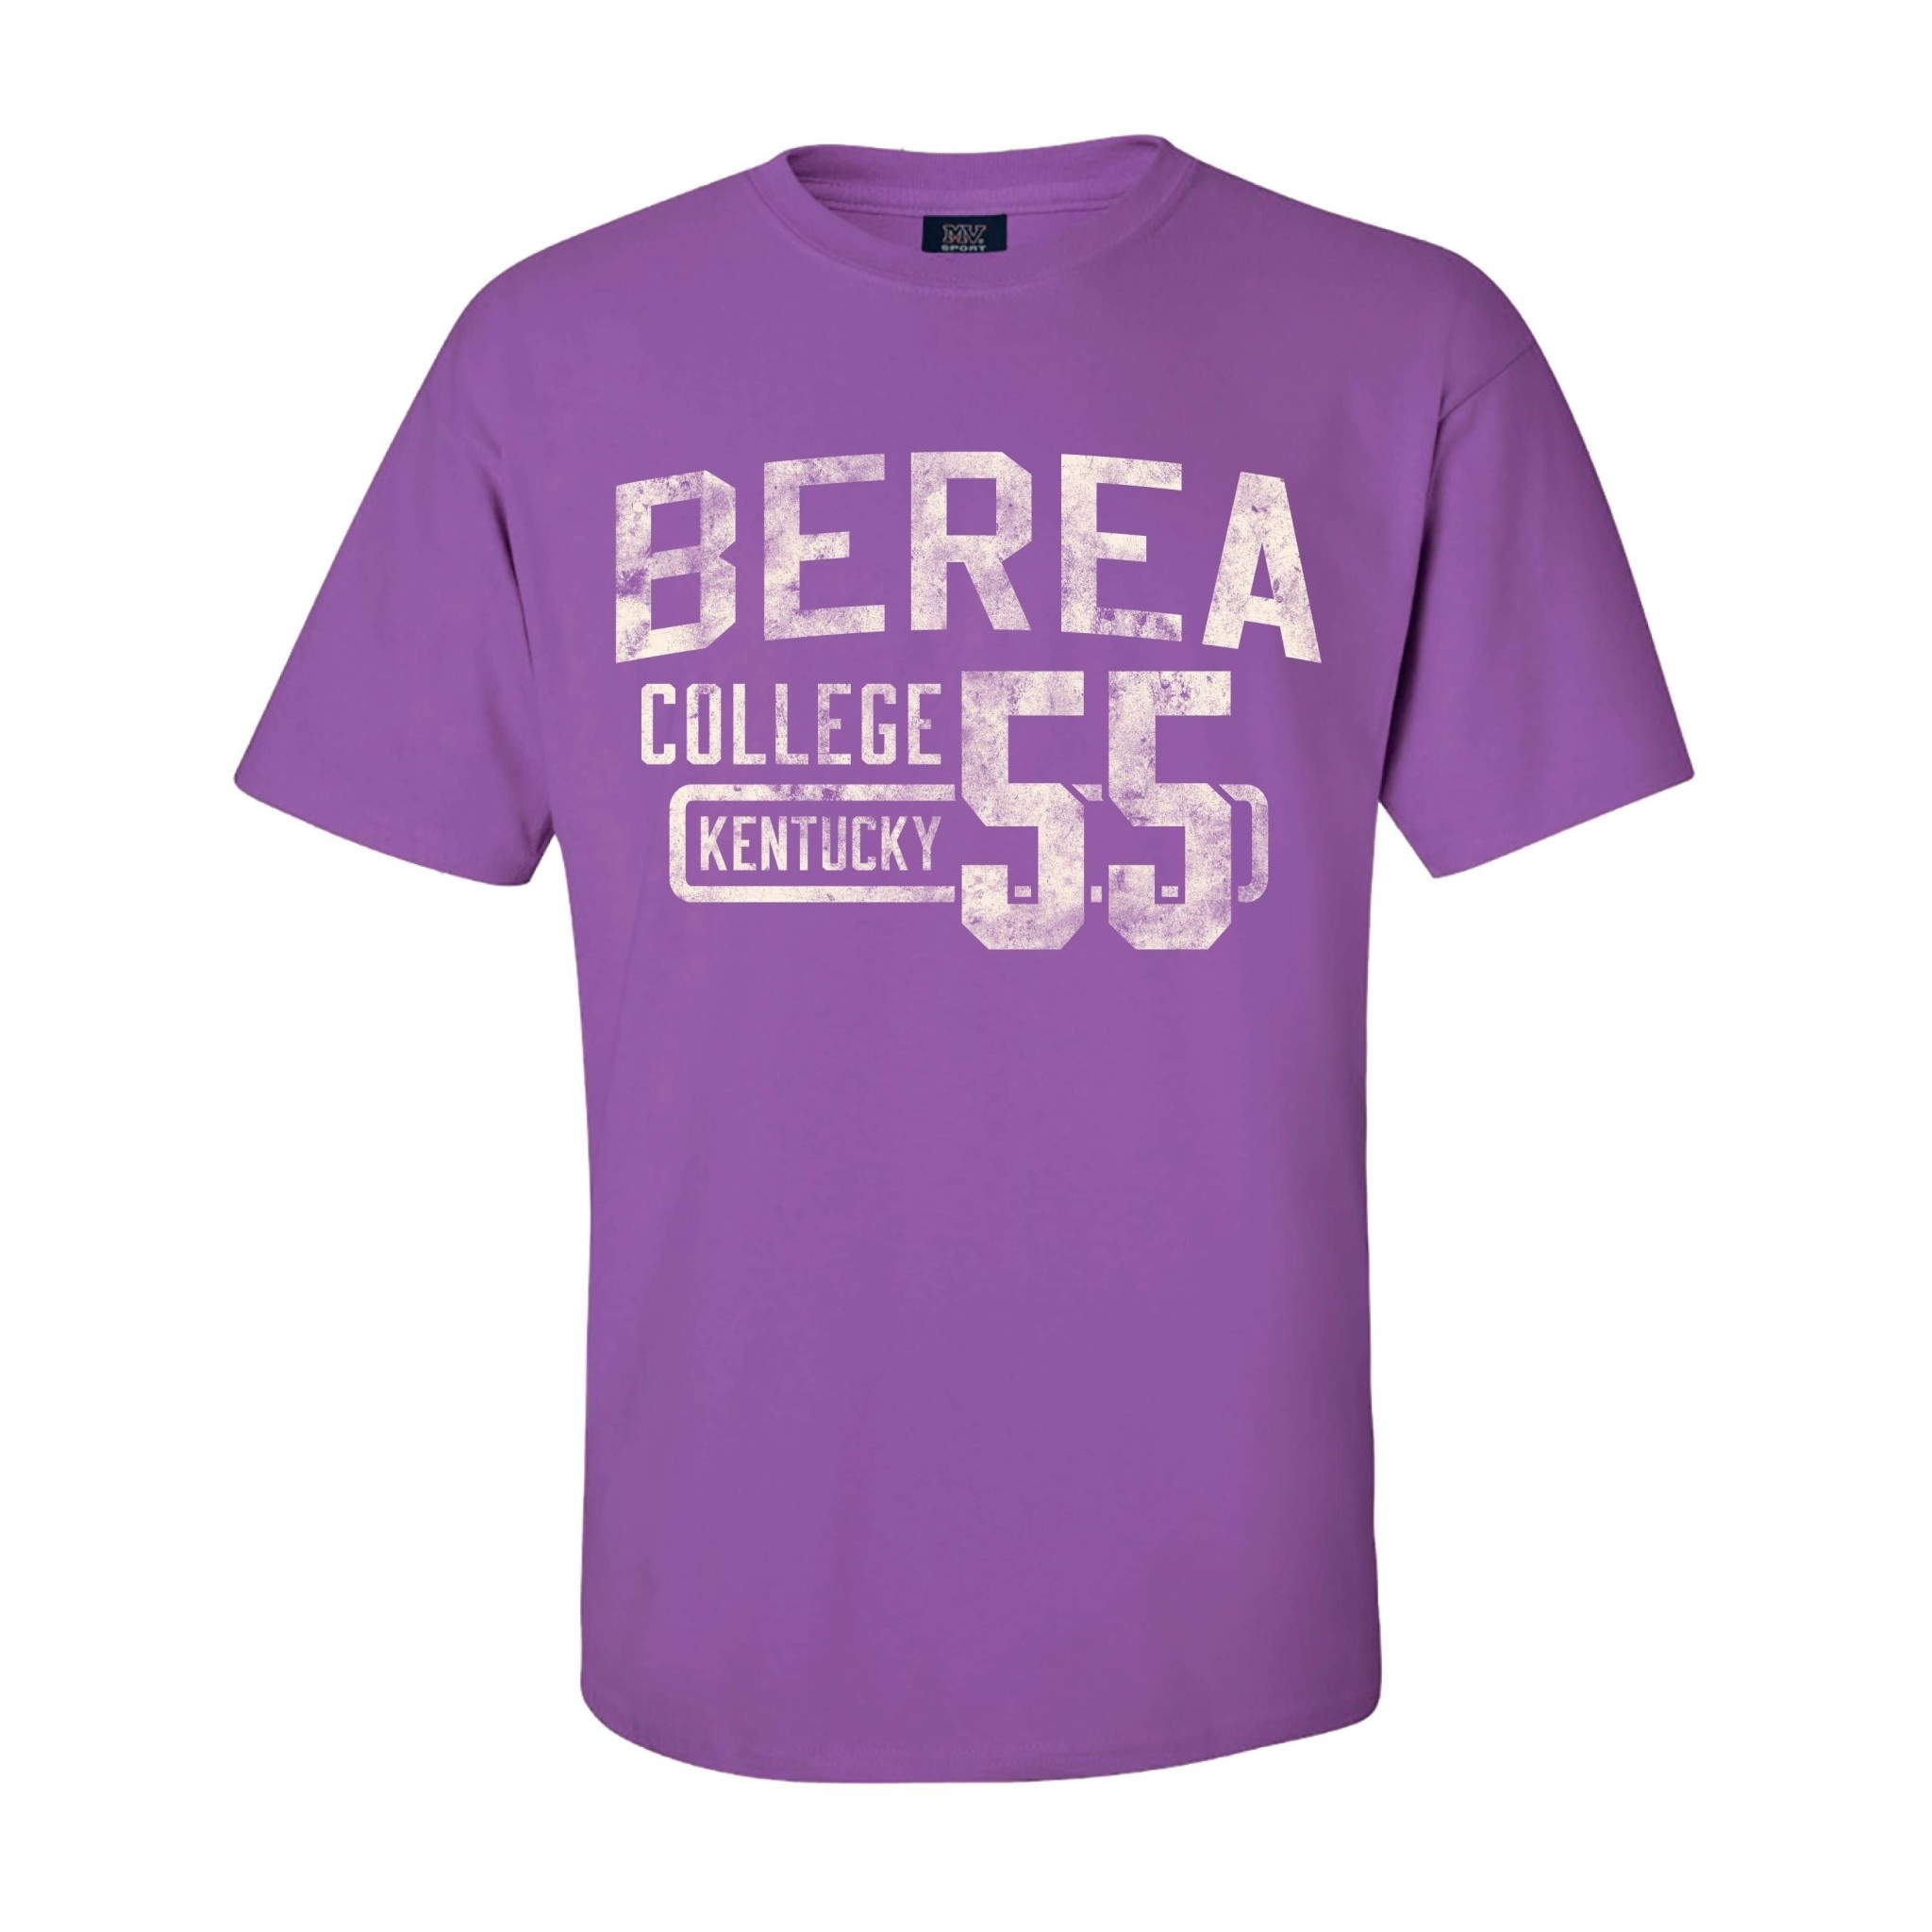 Berea College 55 T-Shirt-6